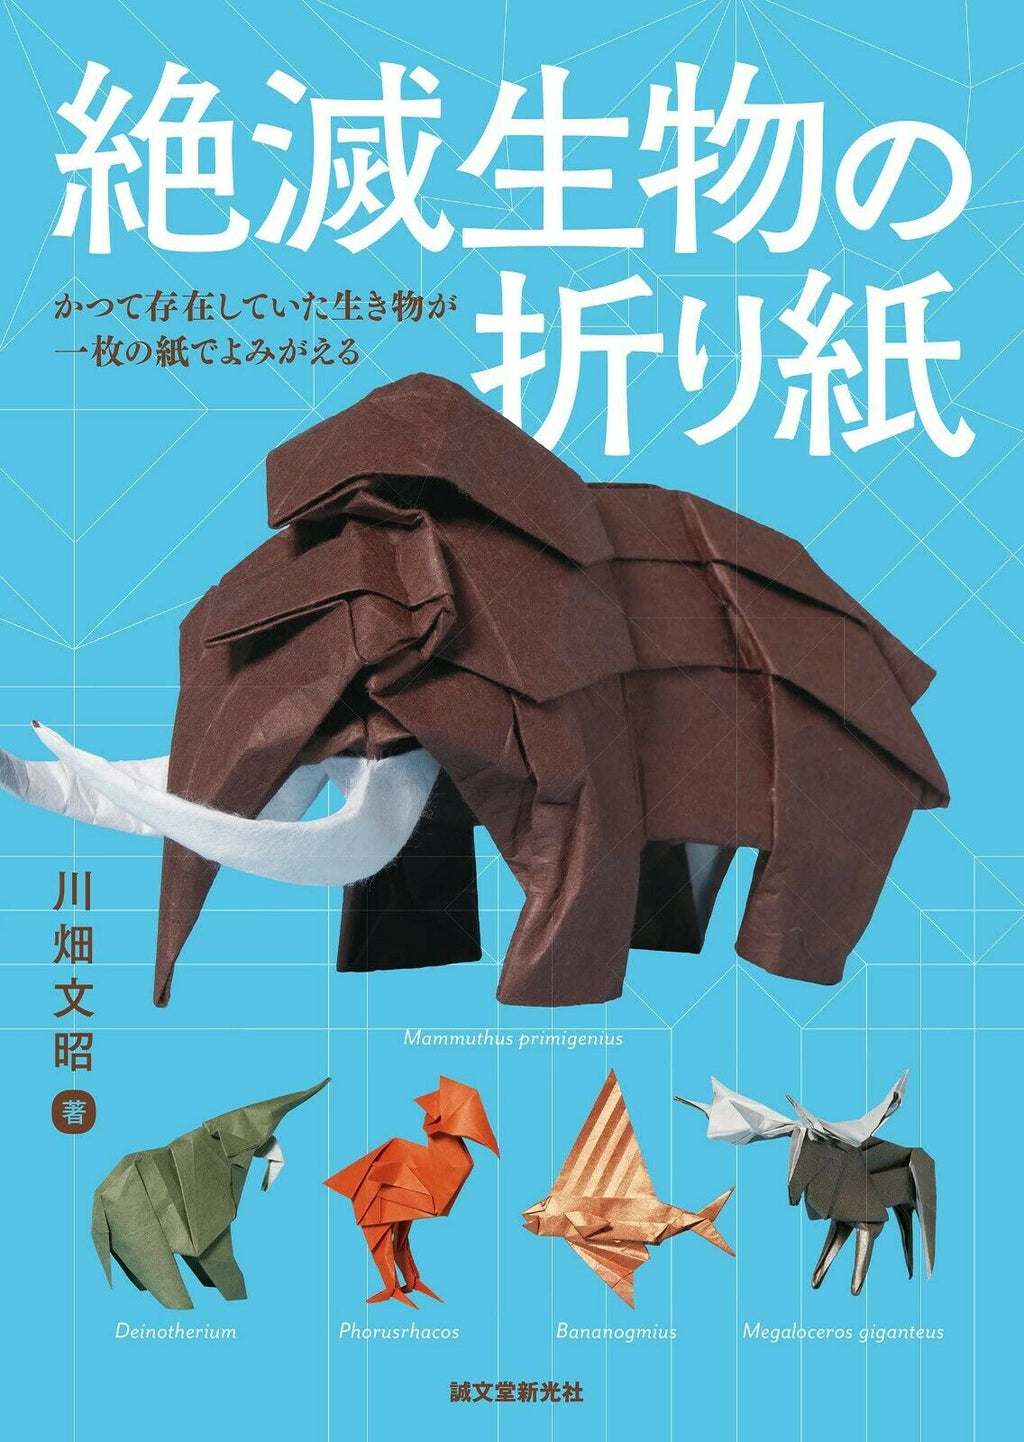 NEW' Origami Extinct Creatures Fumiaki Kawahata | JAPAN Paper Craft Book